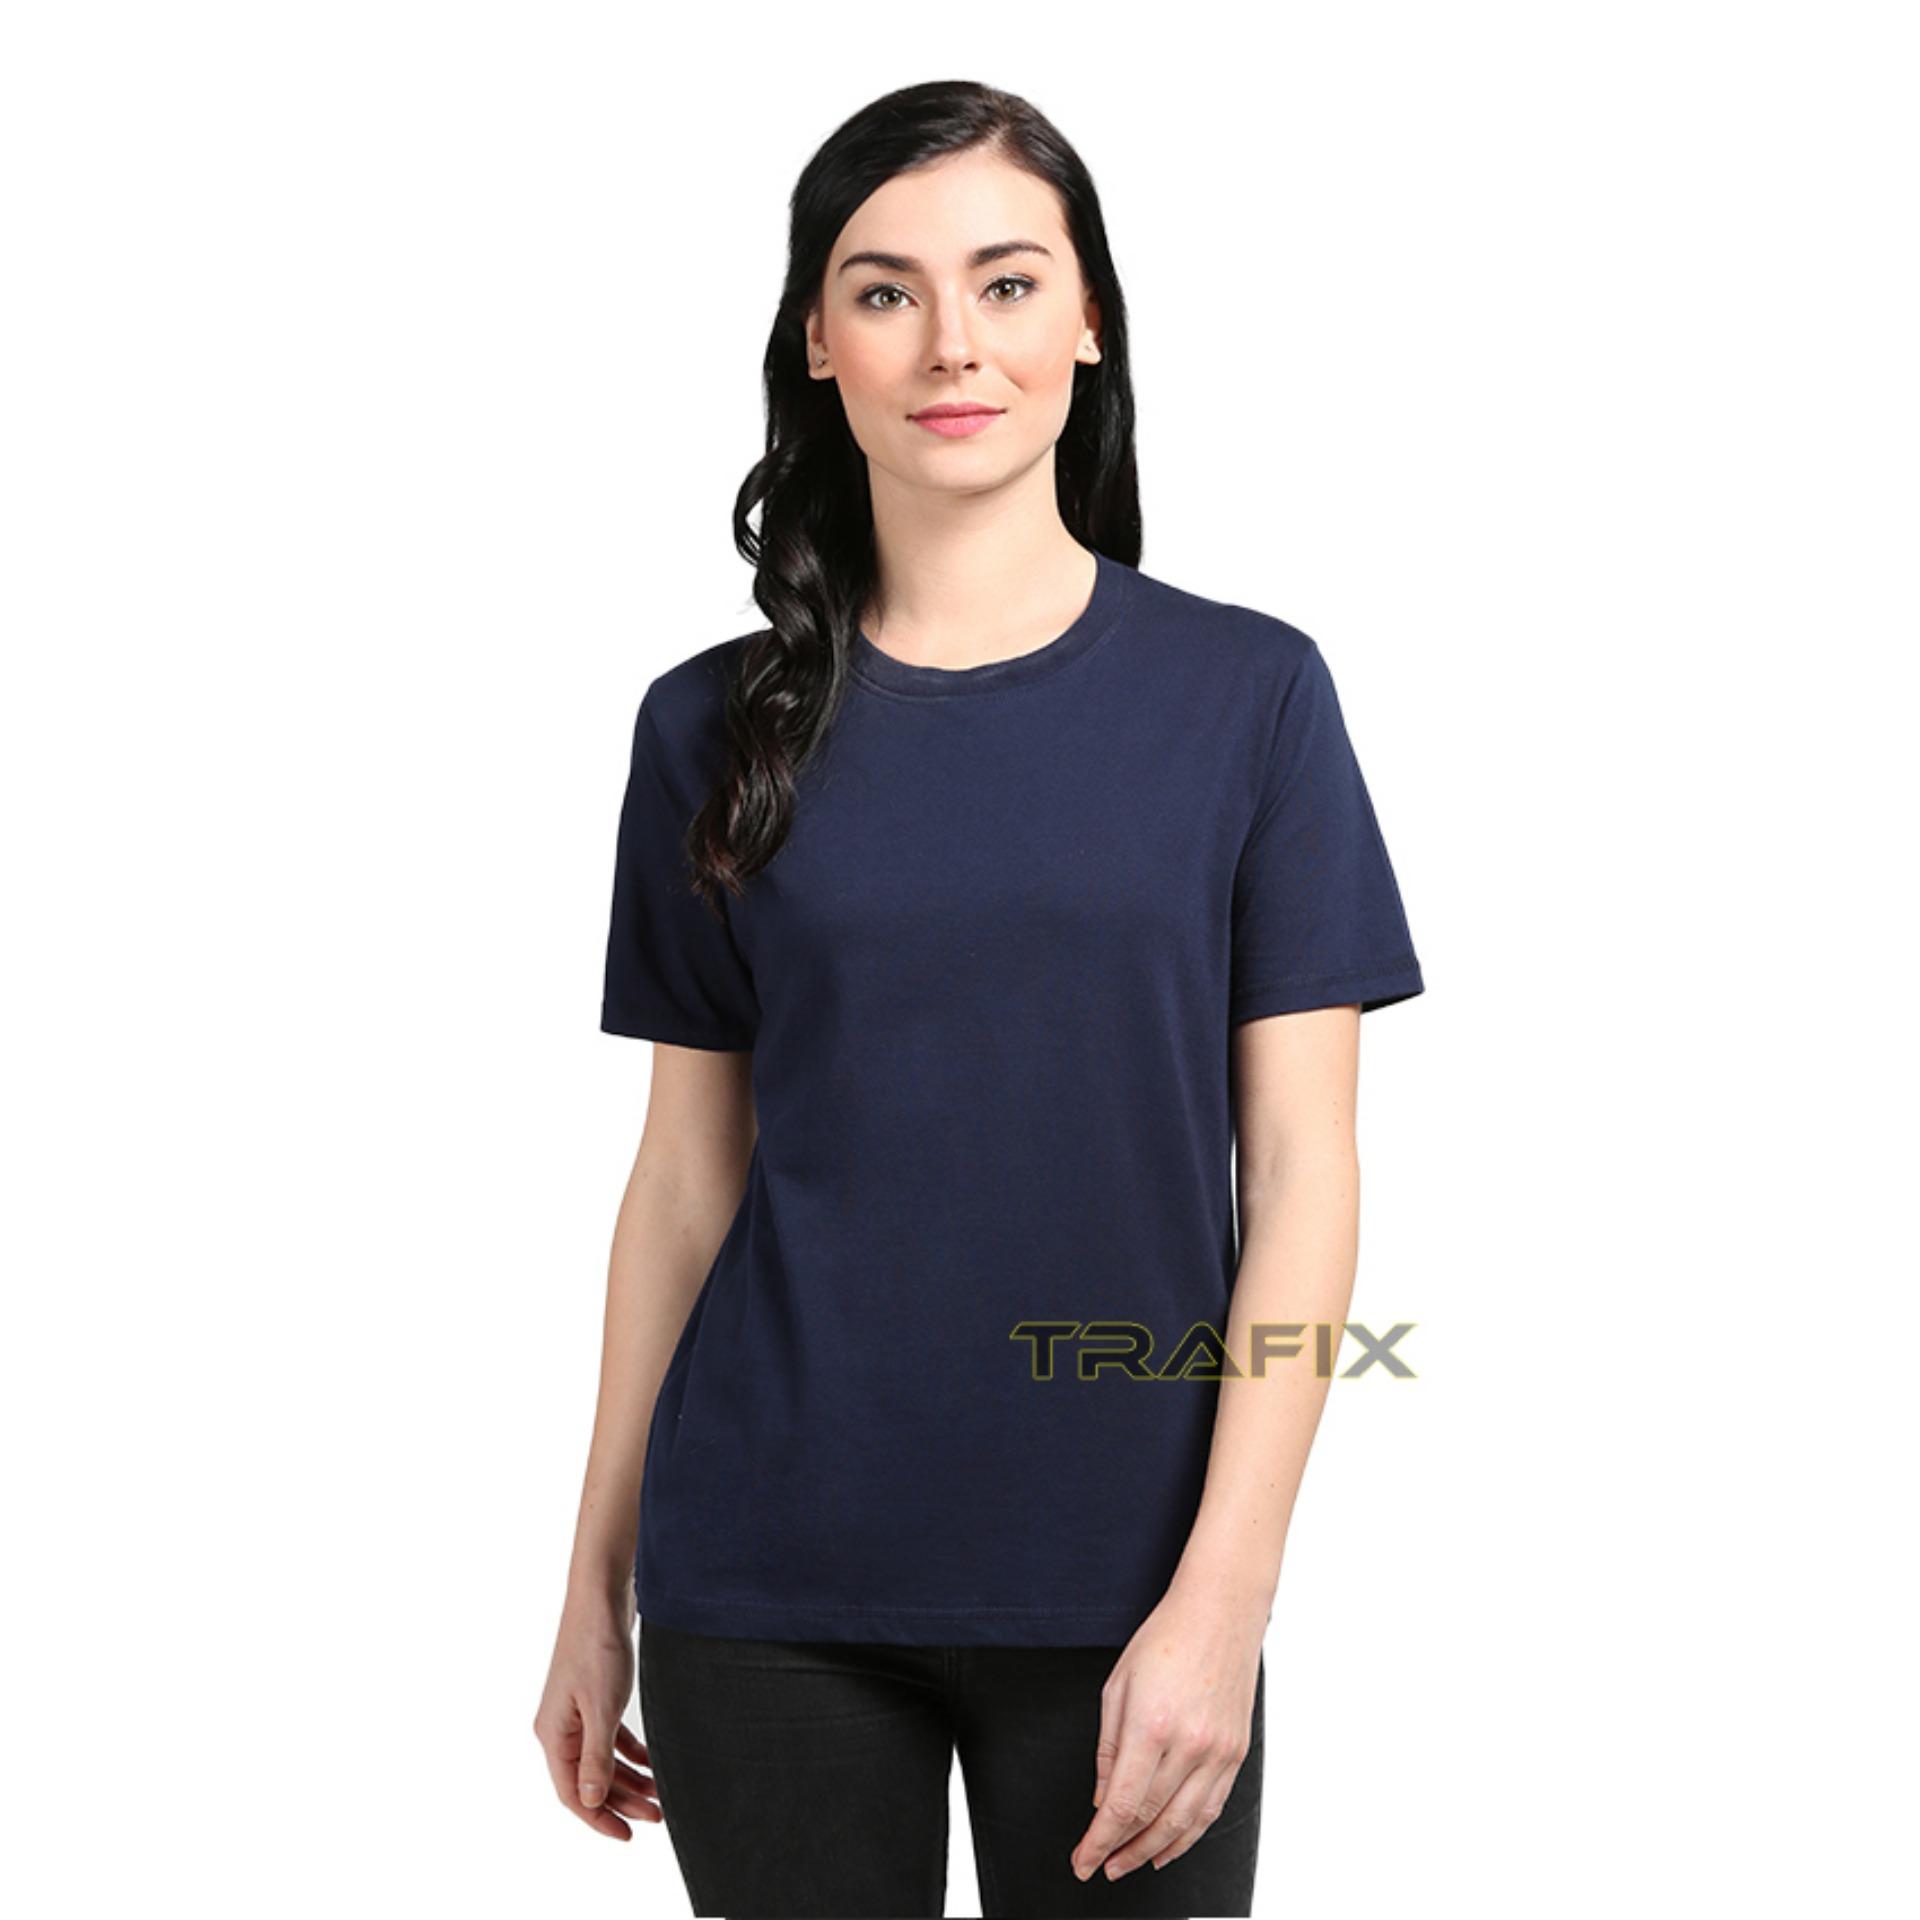 TRAFIX Kaos Polos Wanita Premium - T-Shirt Plain UNISEX Navy Blue